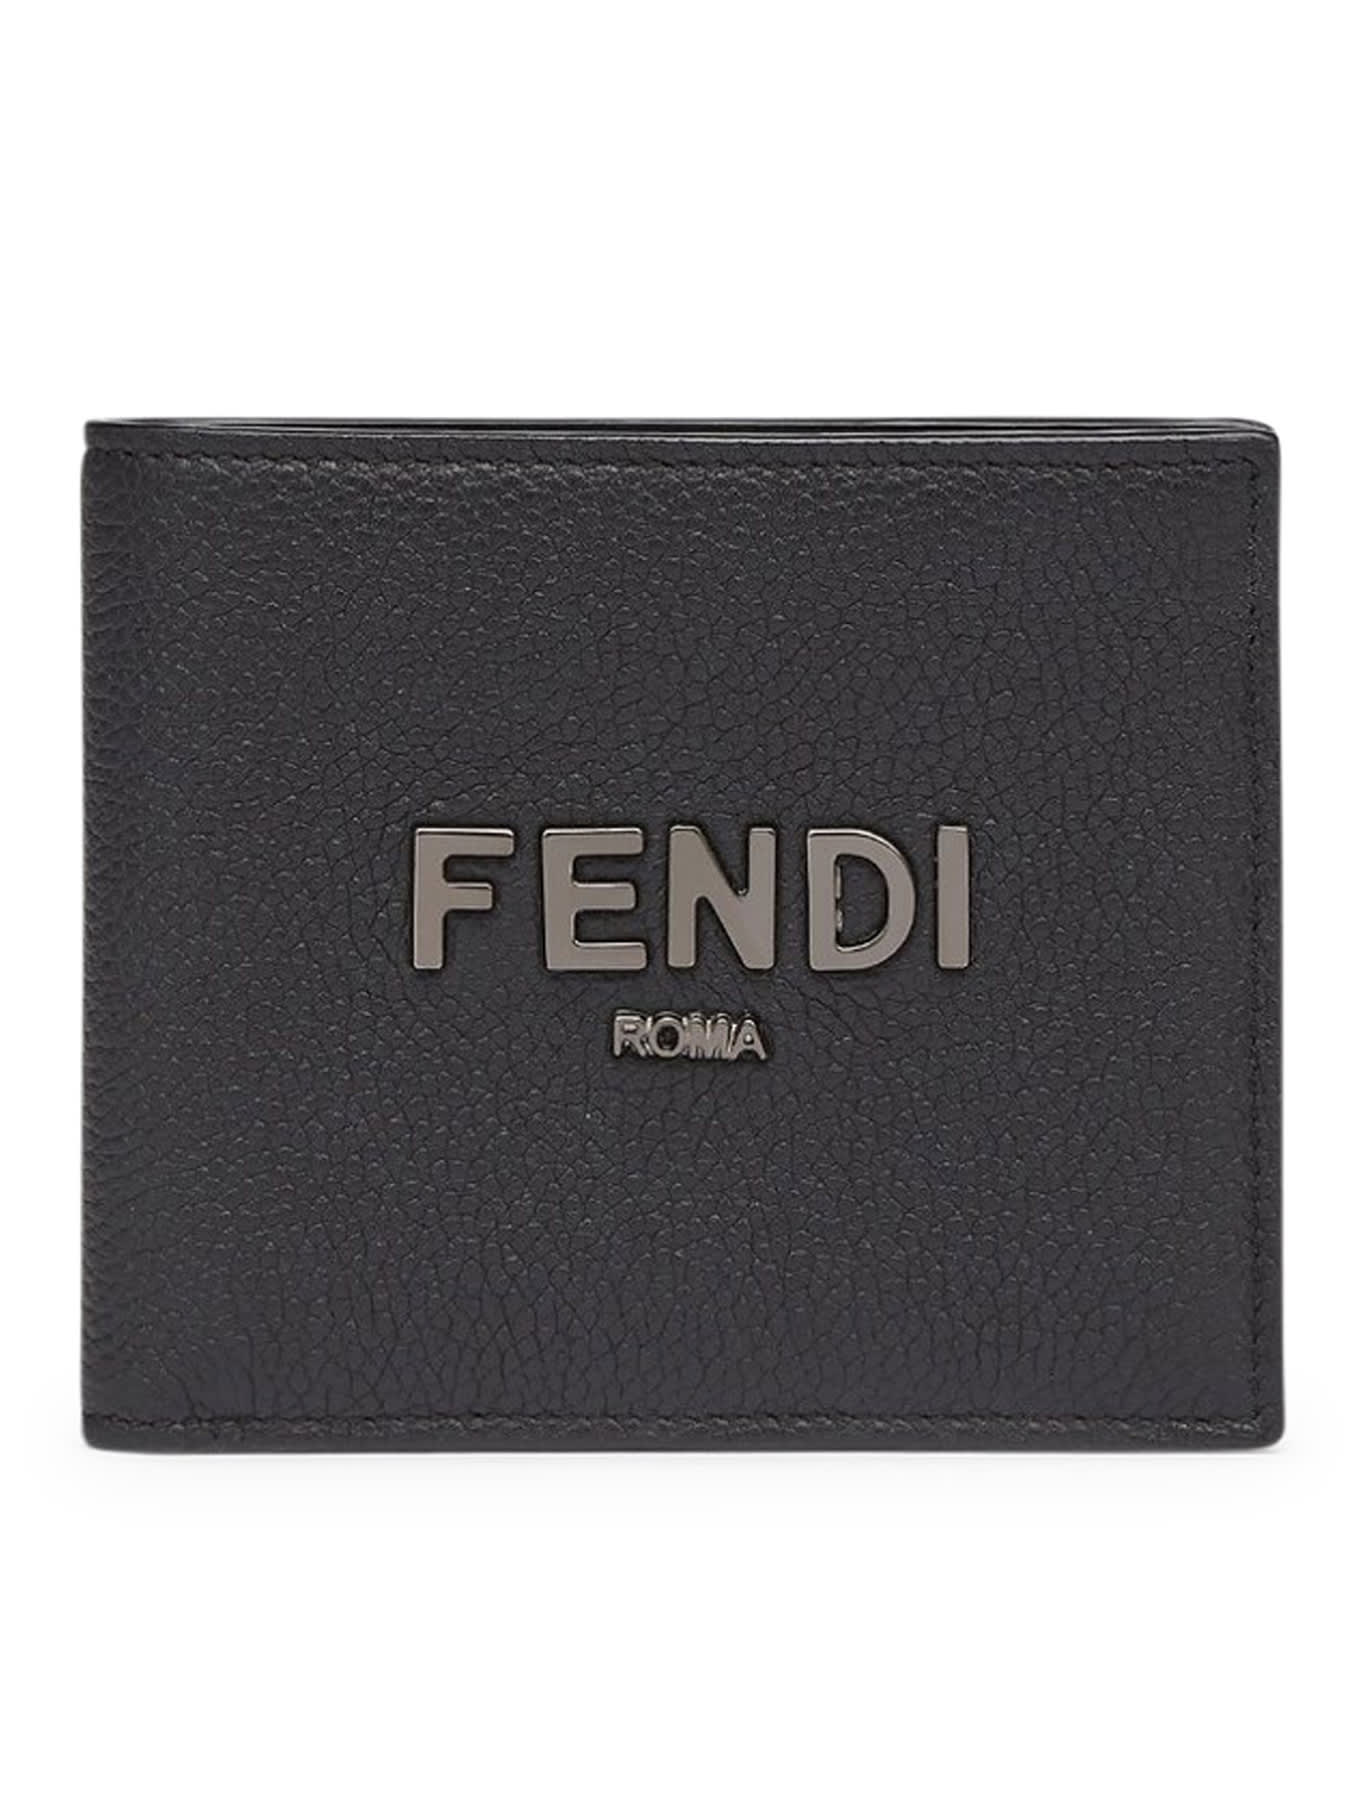 Fendi Bi-fold Wallet Vit.cher C/let